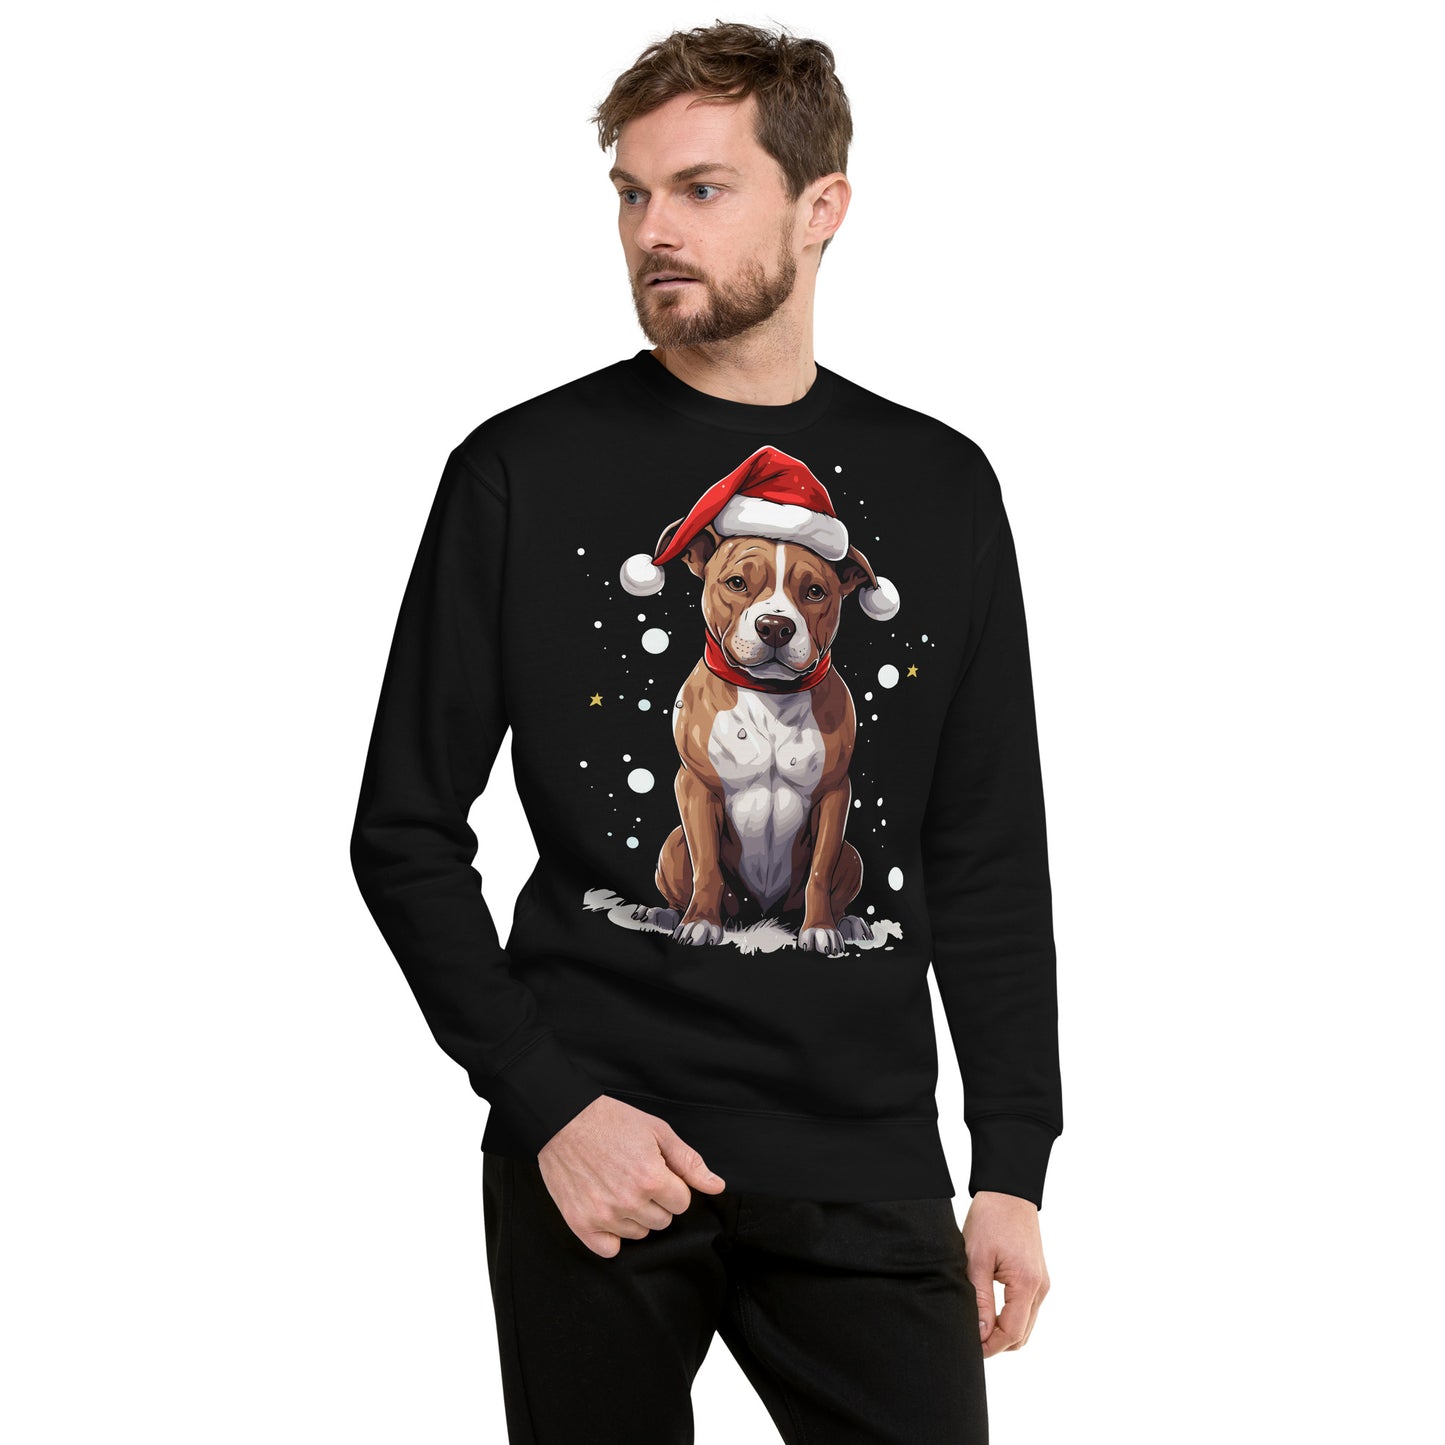 "Santa Paws" Festive Pitbull Holiday Unisex Sweatshirt - Pittie Choy